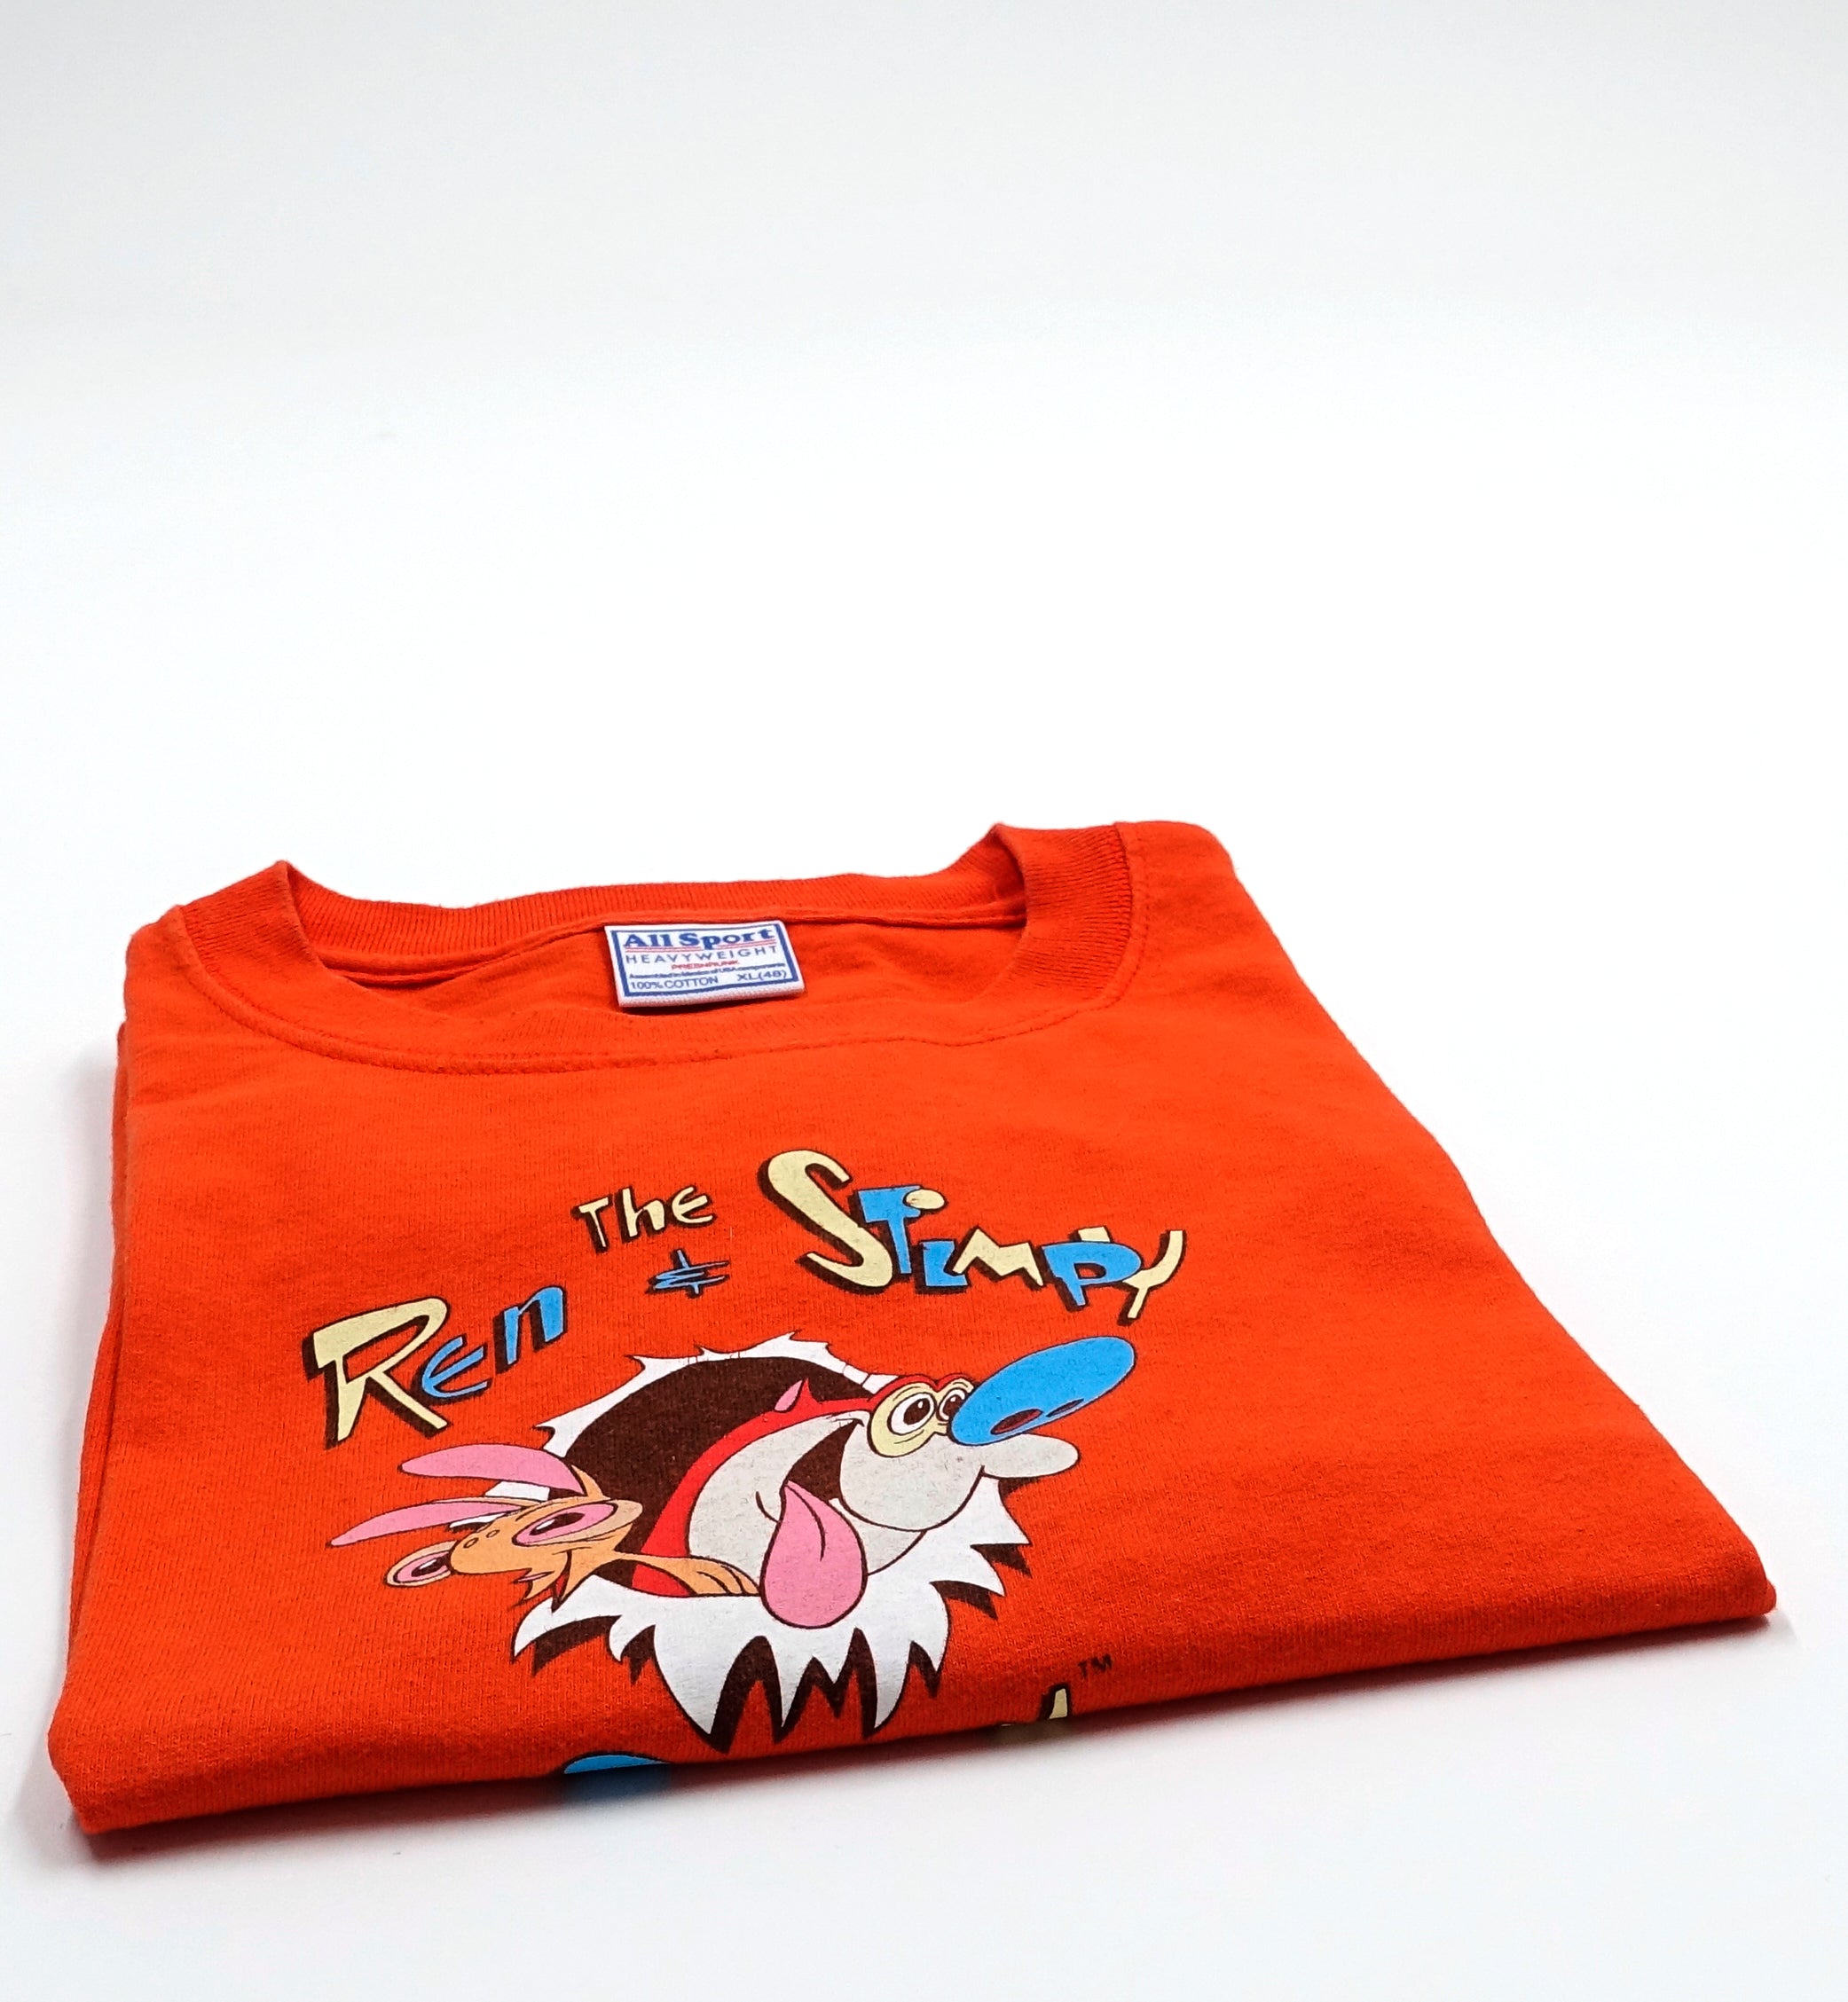 Ren & Stimpy - the Ren & Stimpy Show ©2001 Shirt Size XL